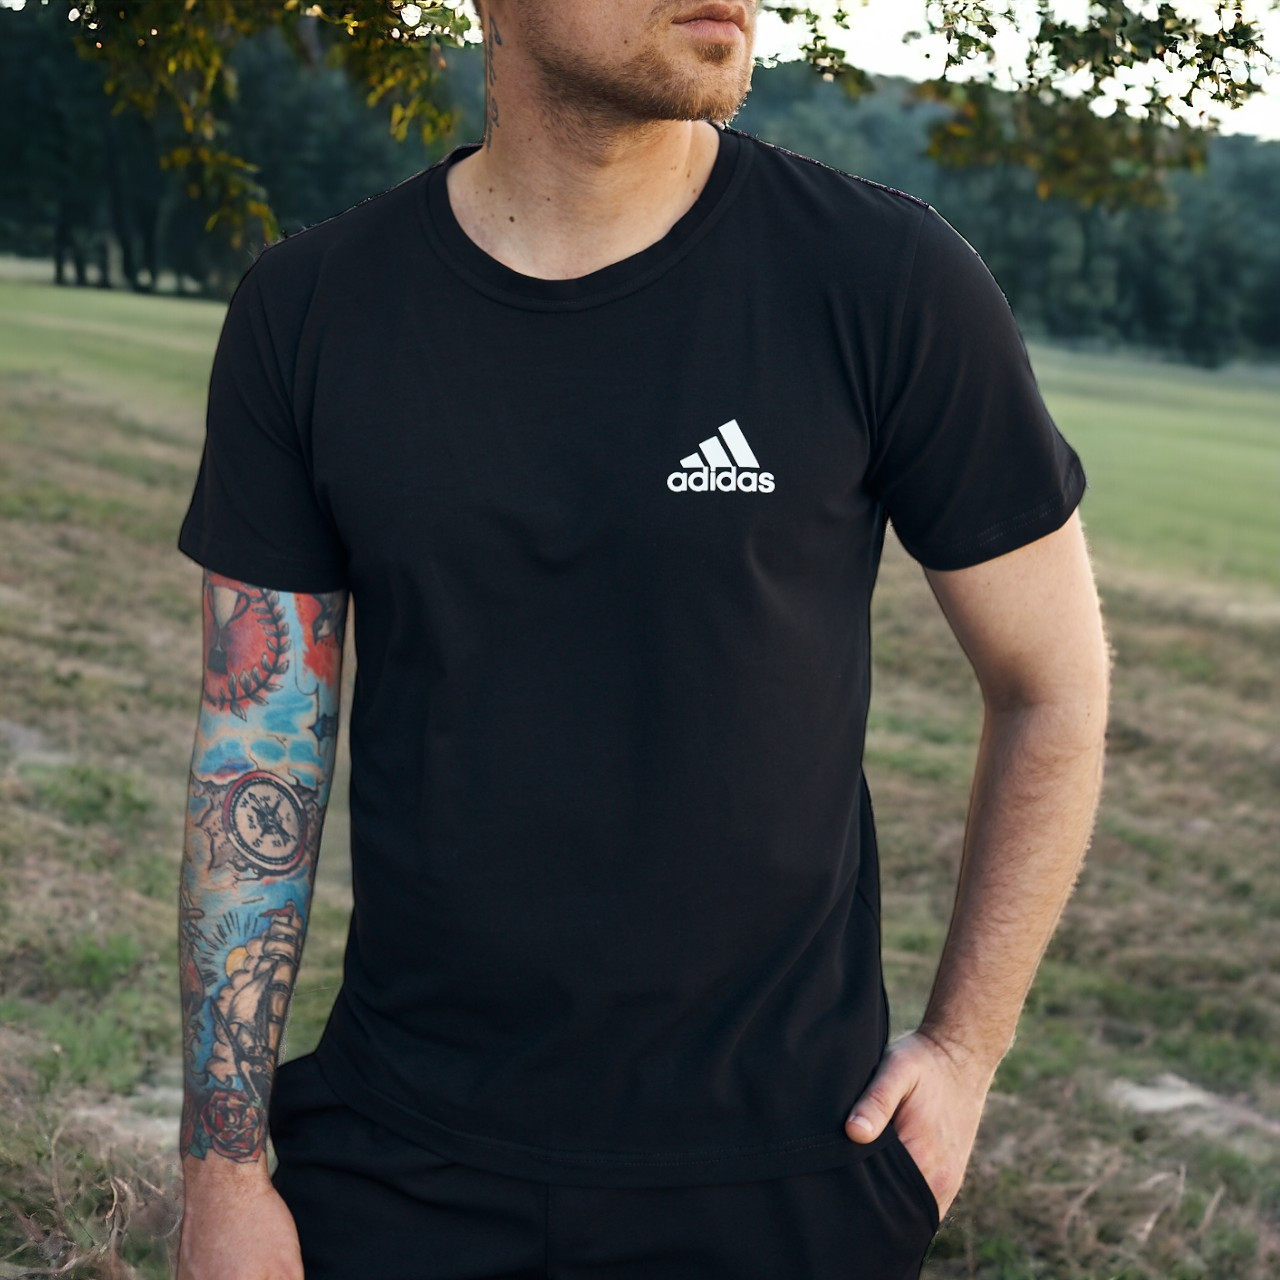 Футболка чоловіча чорна базова Adidas повсякденна стильна модна літня якісна зручна фірмова брендова